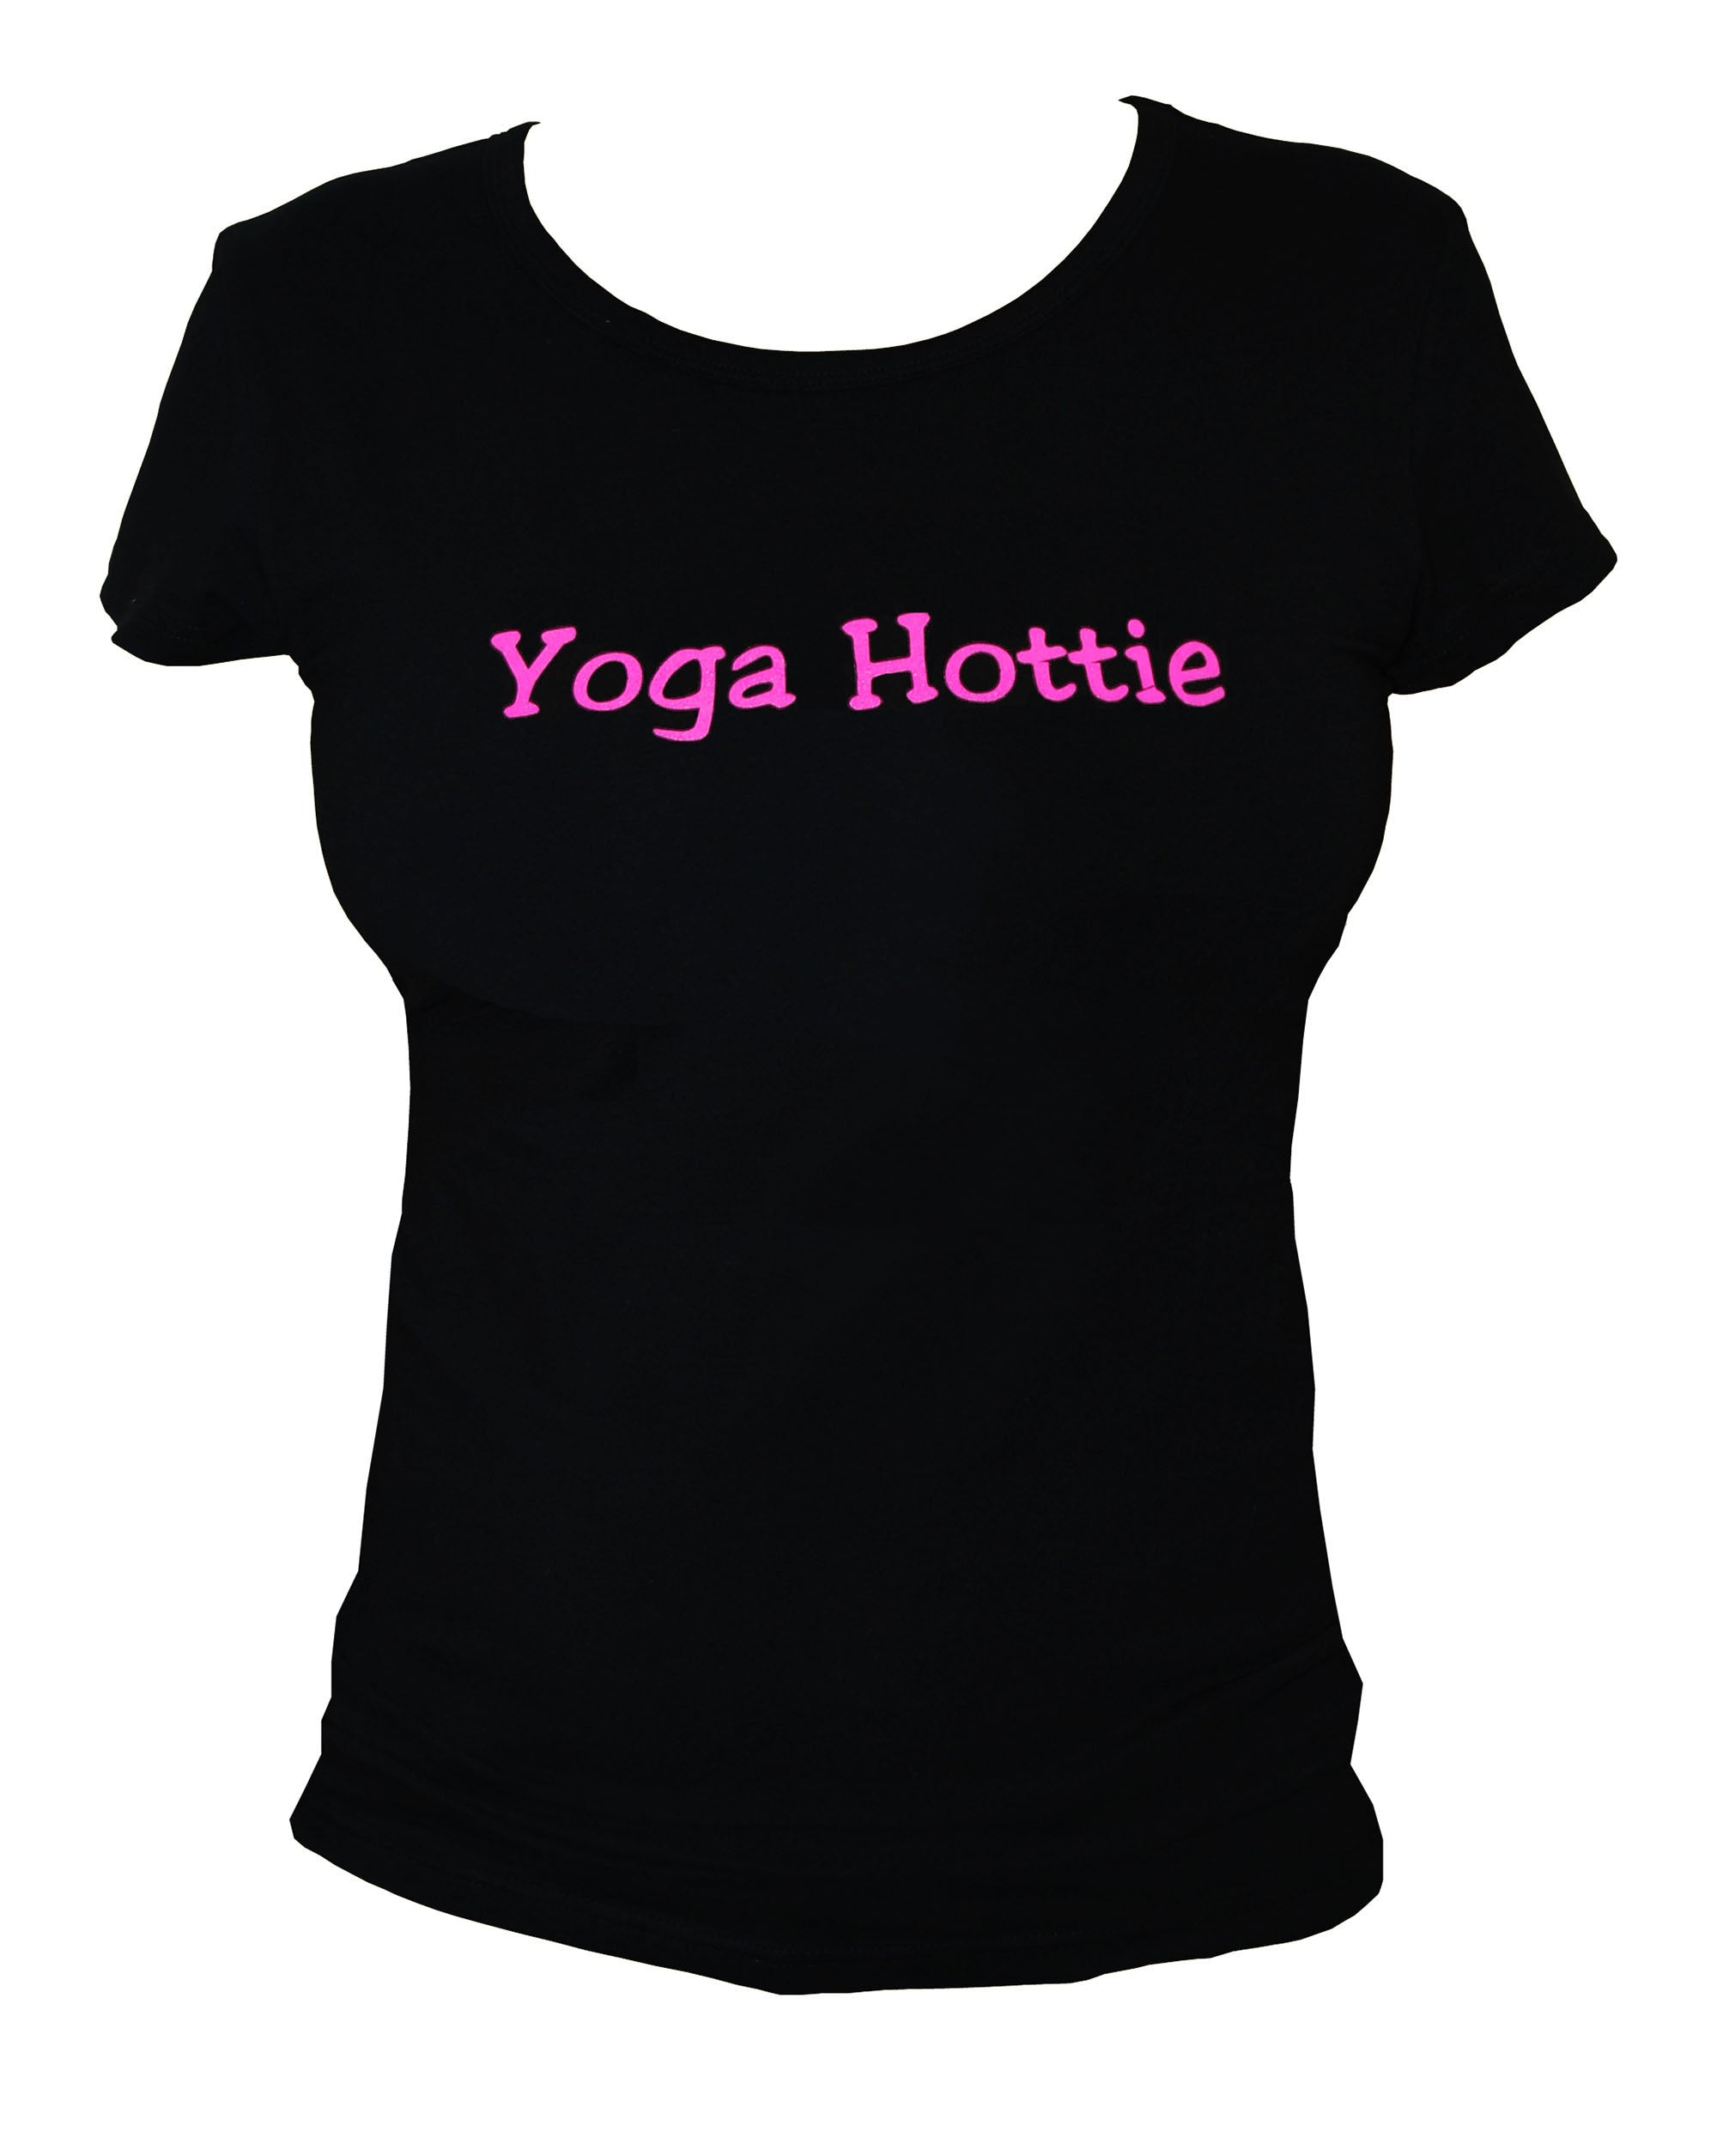 Yoga Hottie Graphic Tee Most Comfortable Womens Black Cap Sleeve Tee